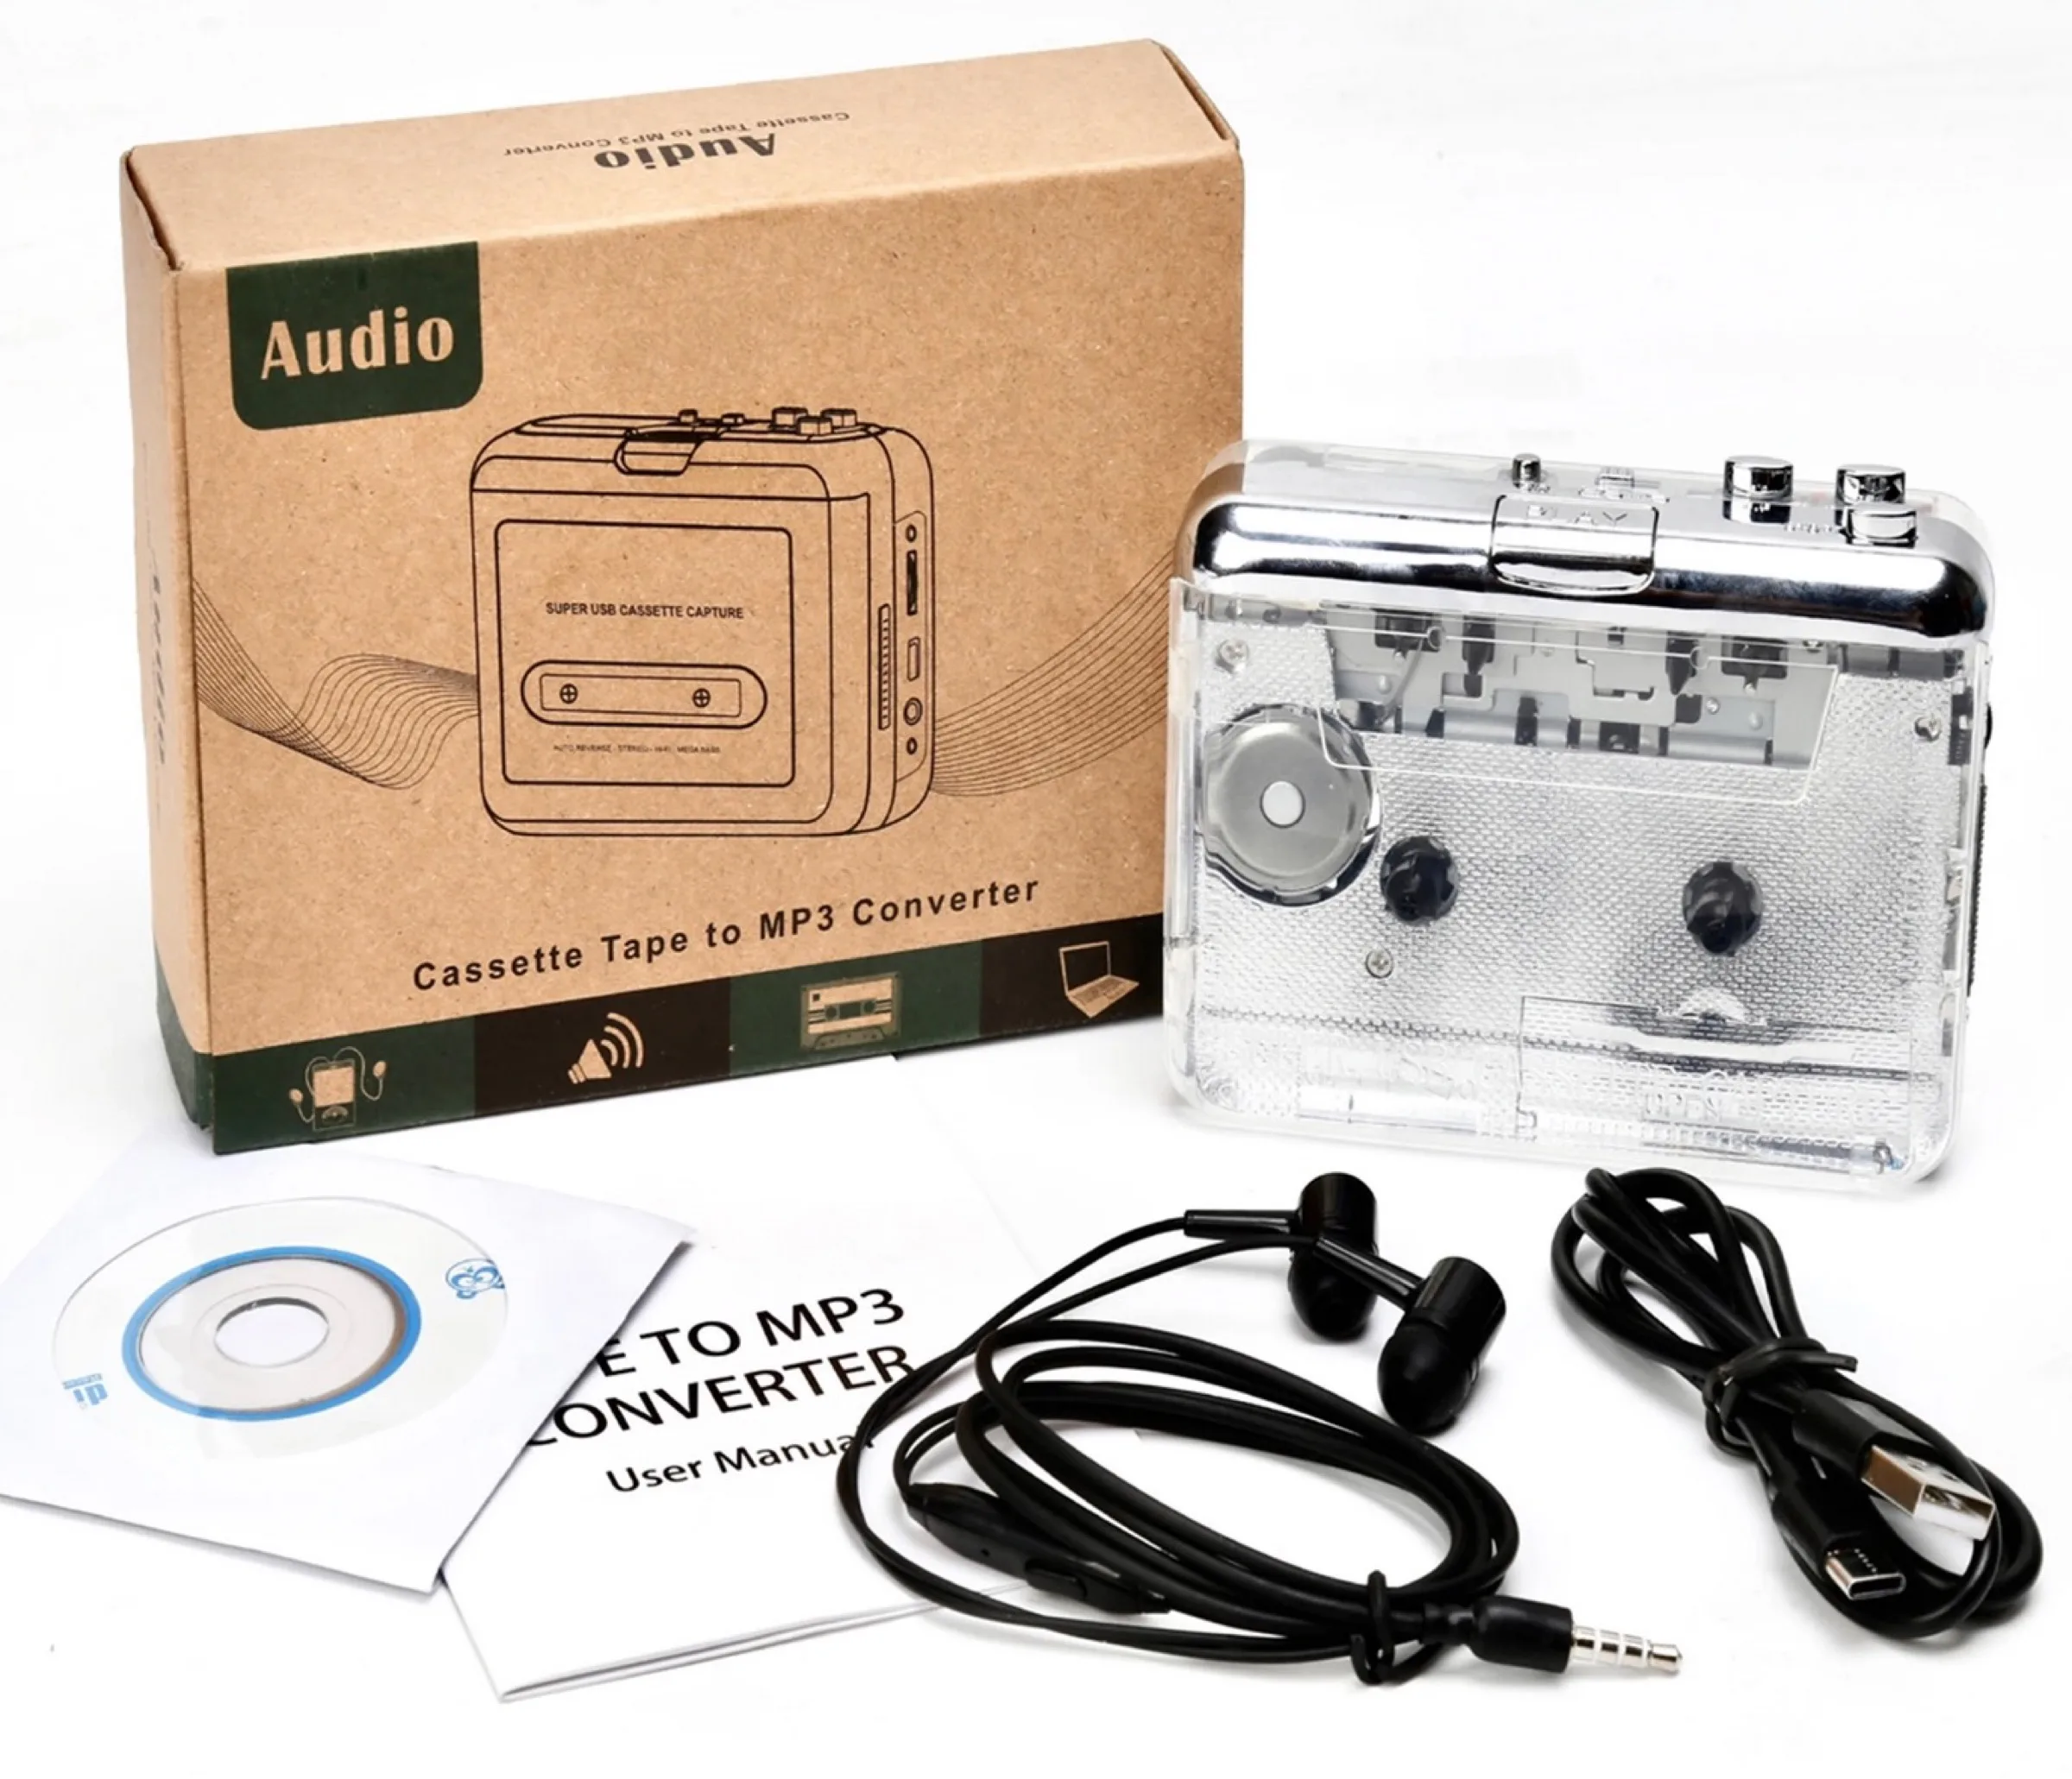 TON010 converte le vecchie musicassette in MP3